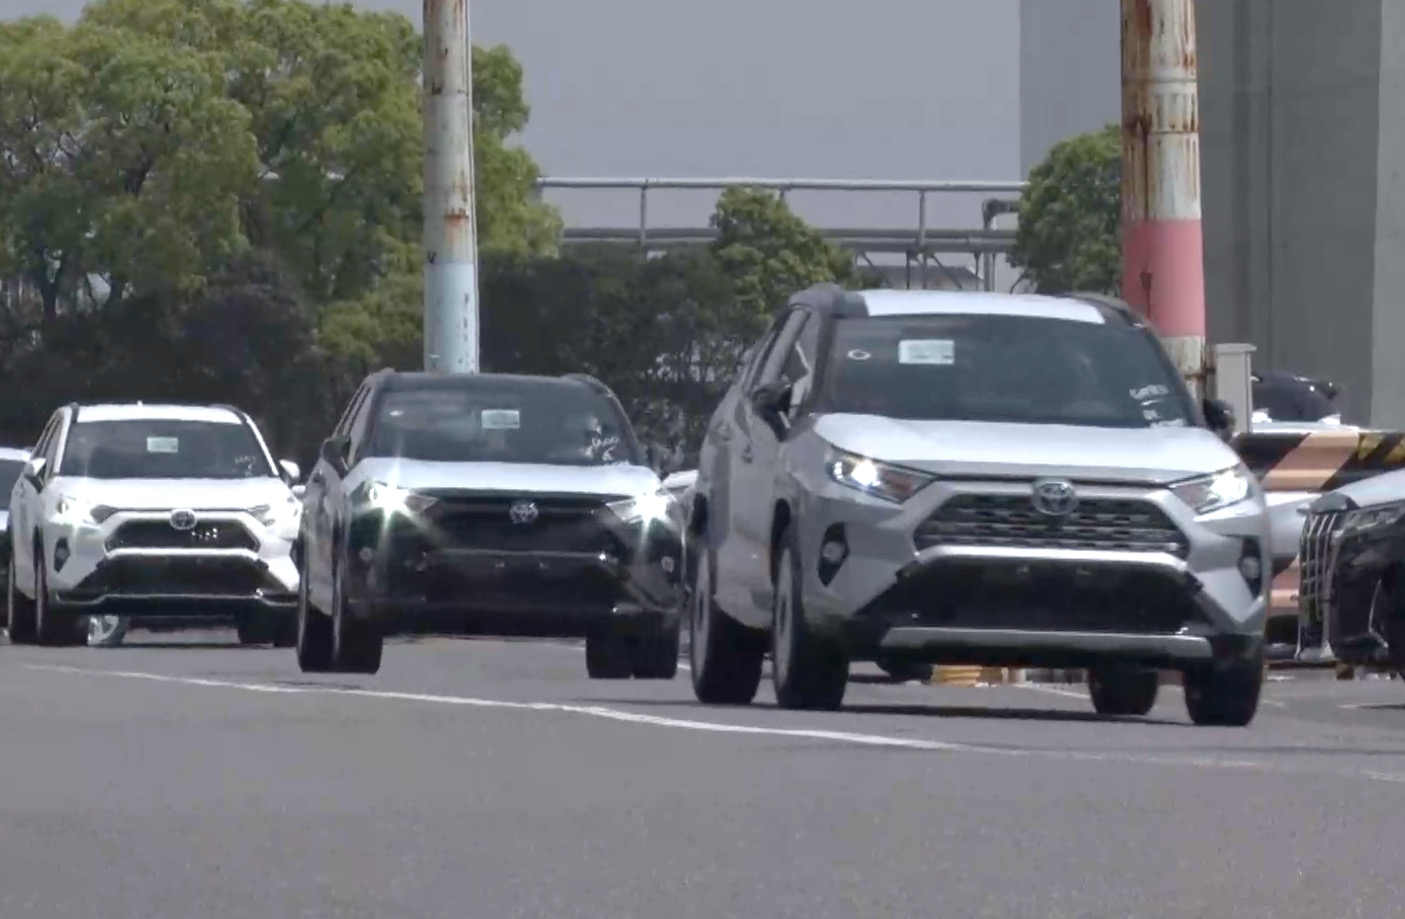 Toyota Australia outlines delivery delays; RAV4 hybrid, 70 Series longest wait